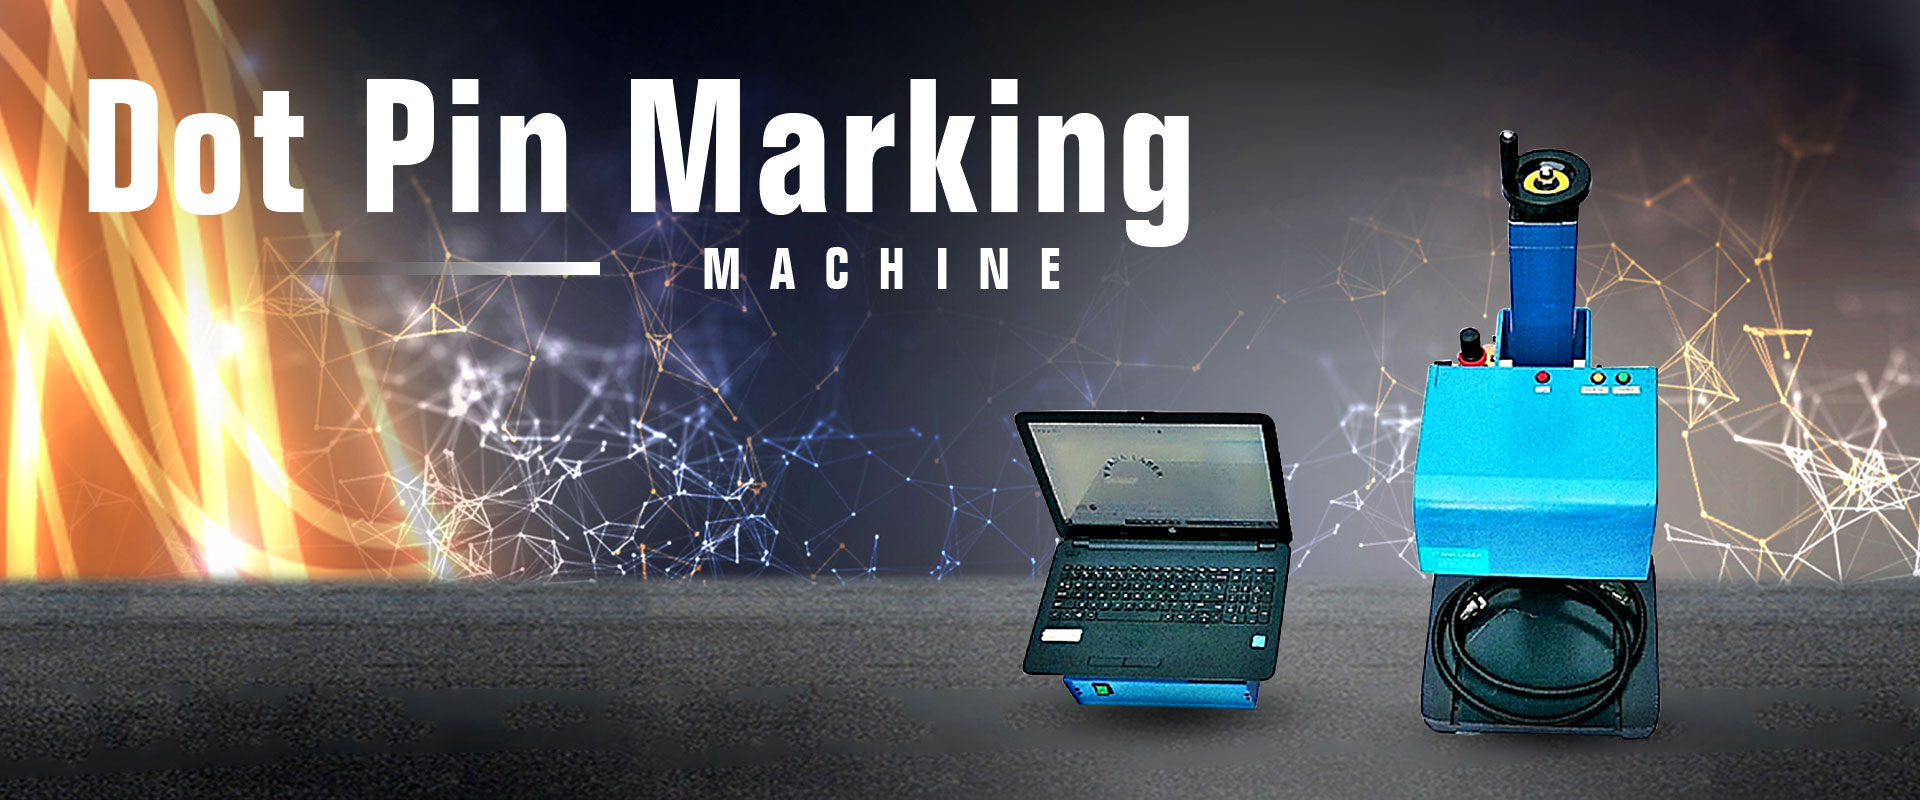 Dot Pin Marking Machine